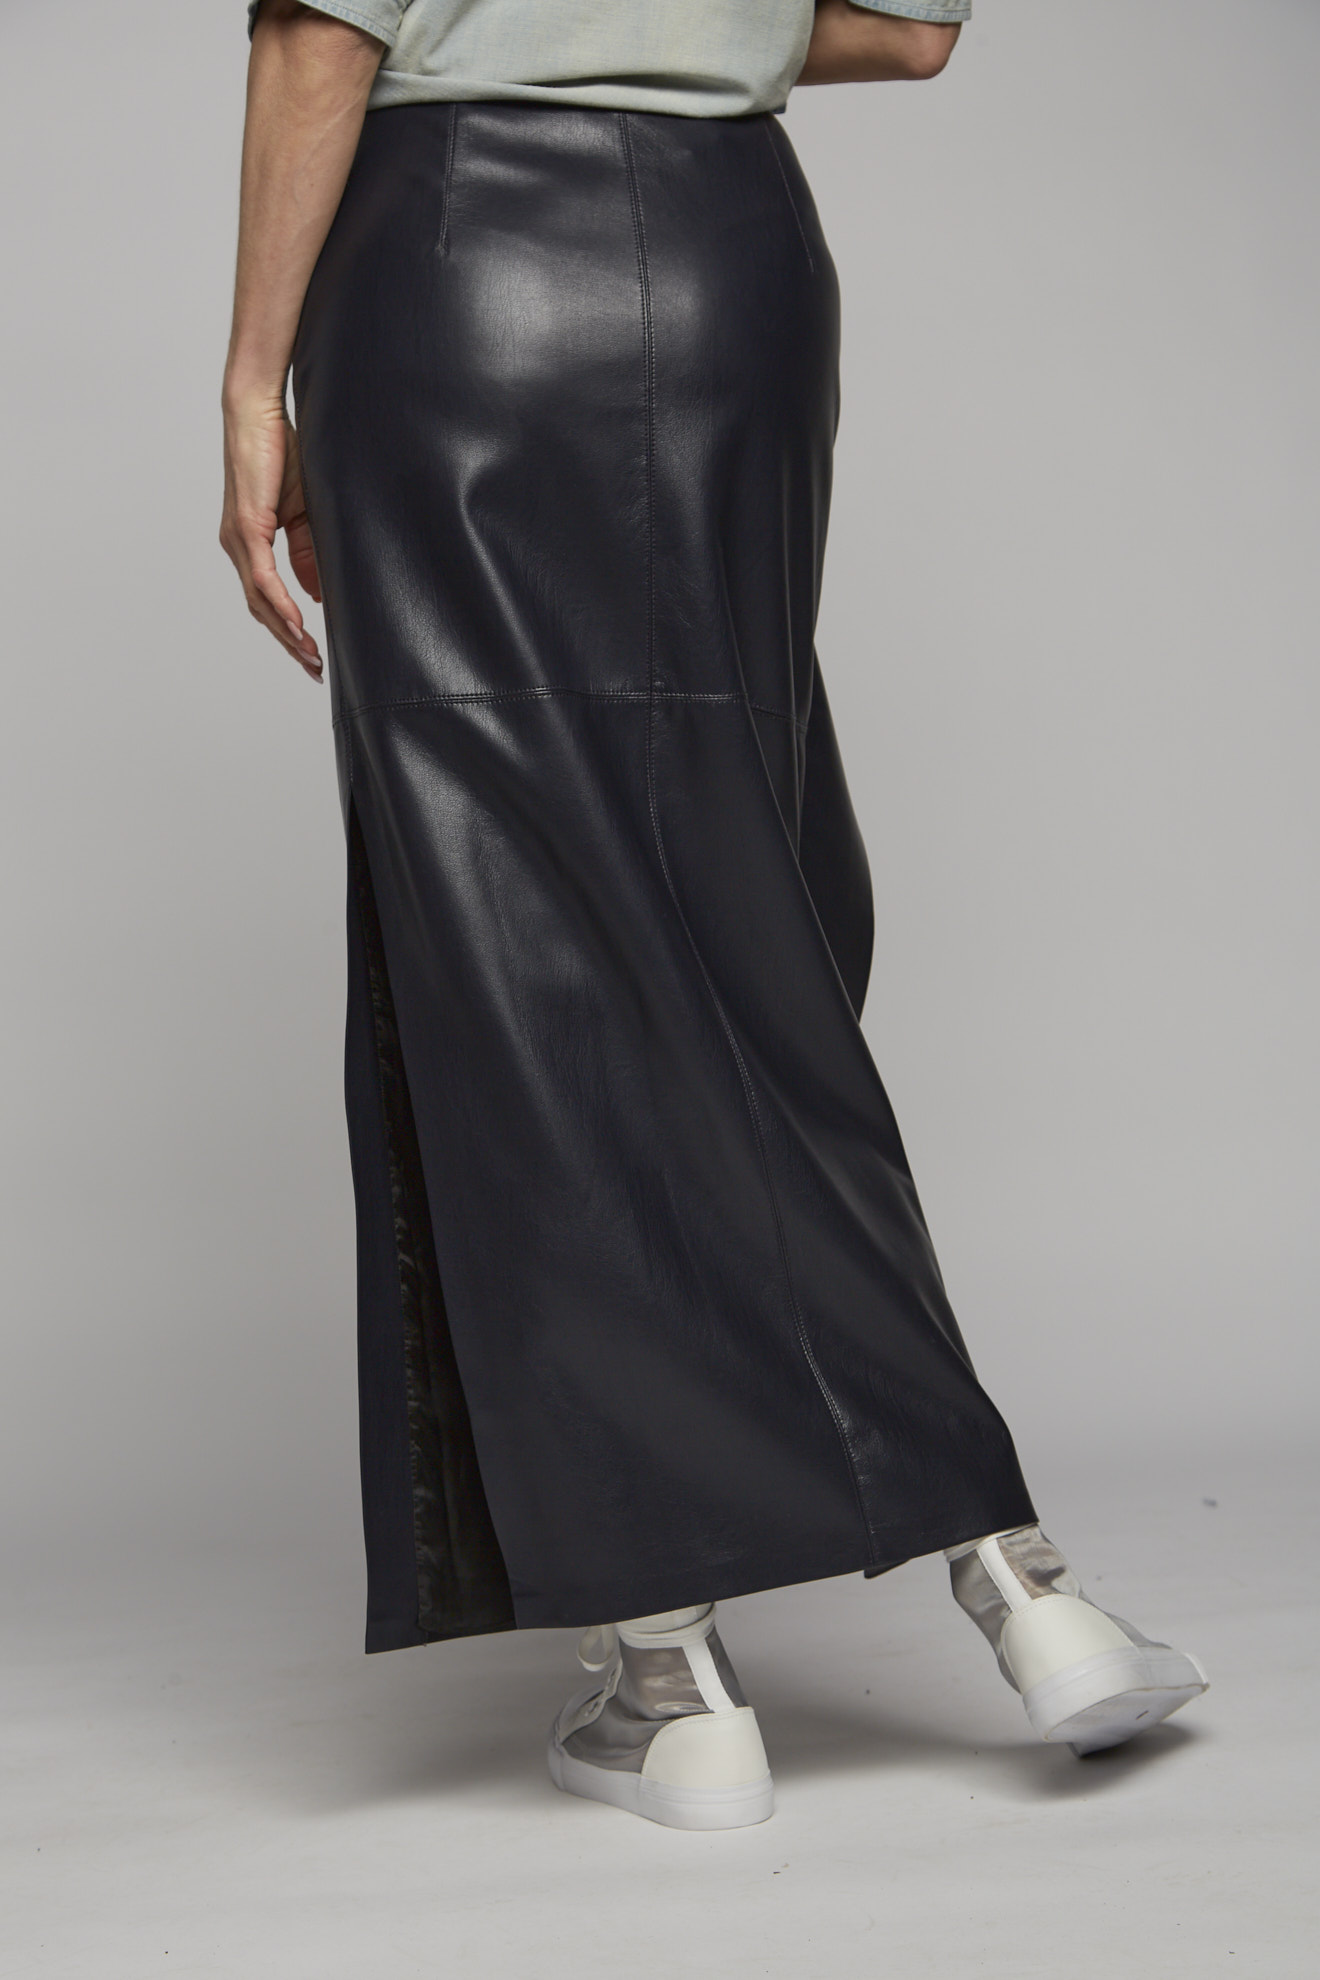 nanushka skirt black plain vegan leather model back